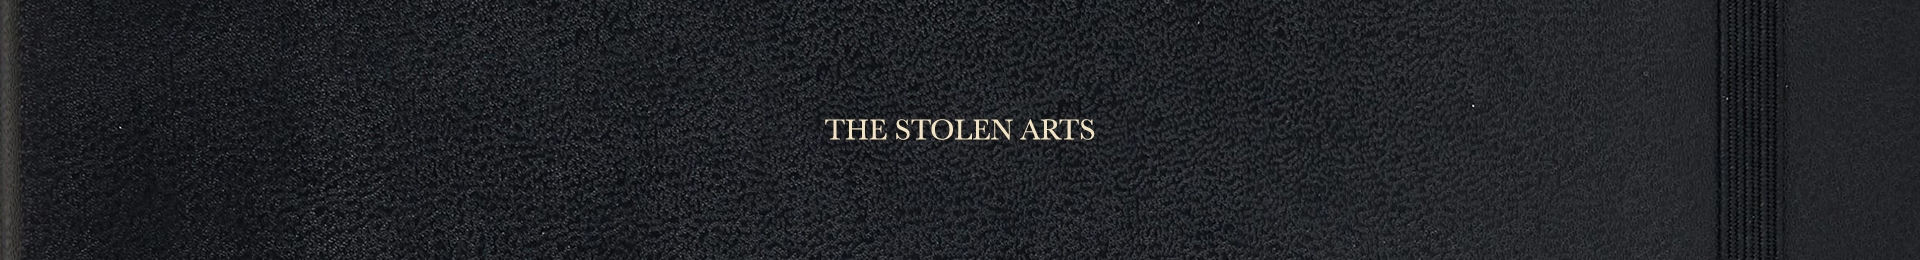 THE STOLEN ARTS banner